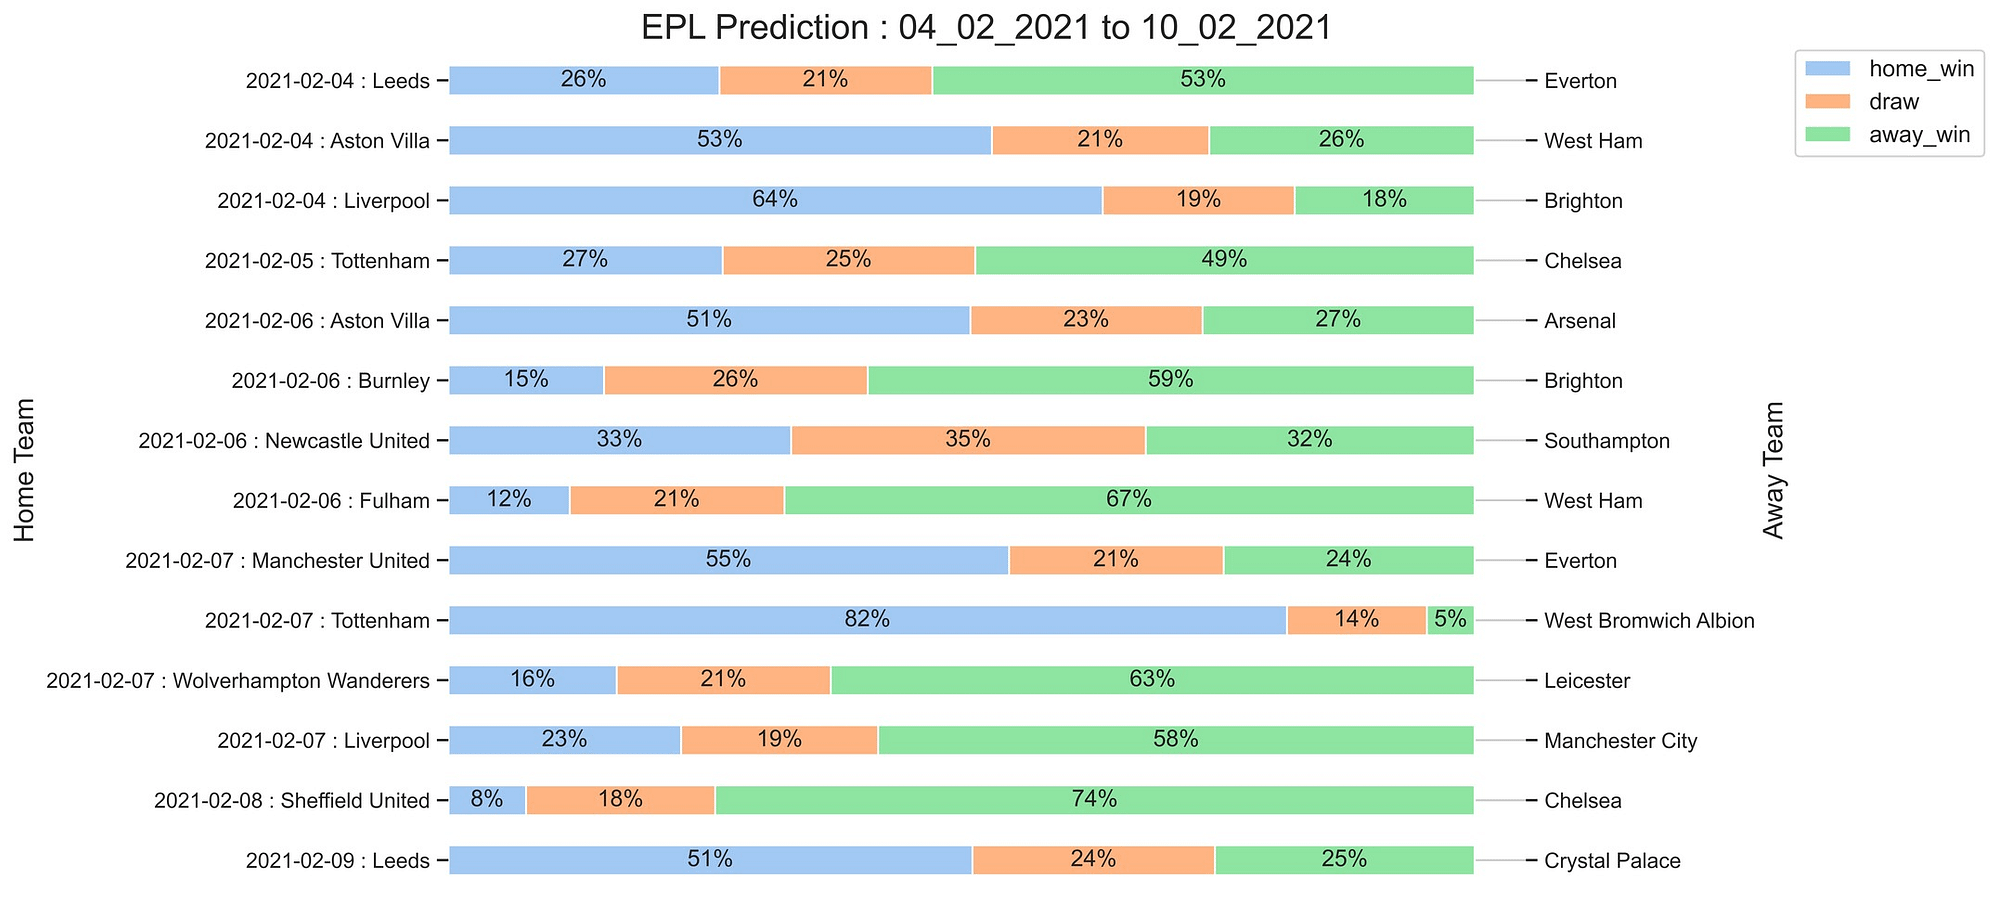 EPL_Prediction 04_02_2021